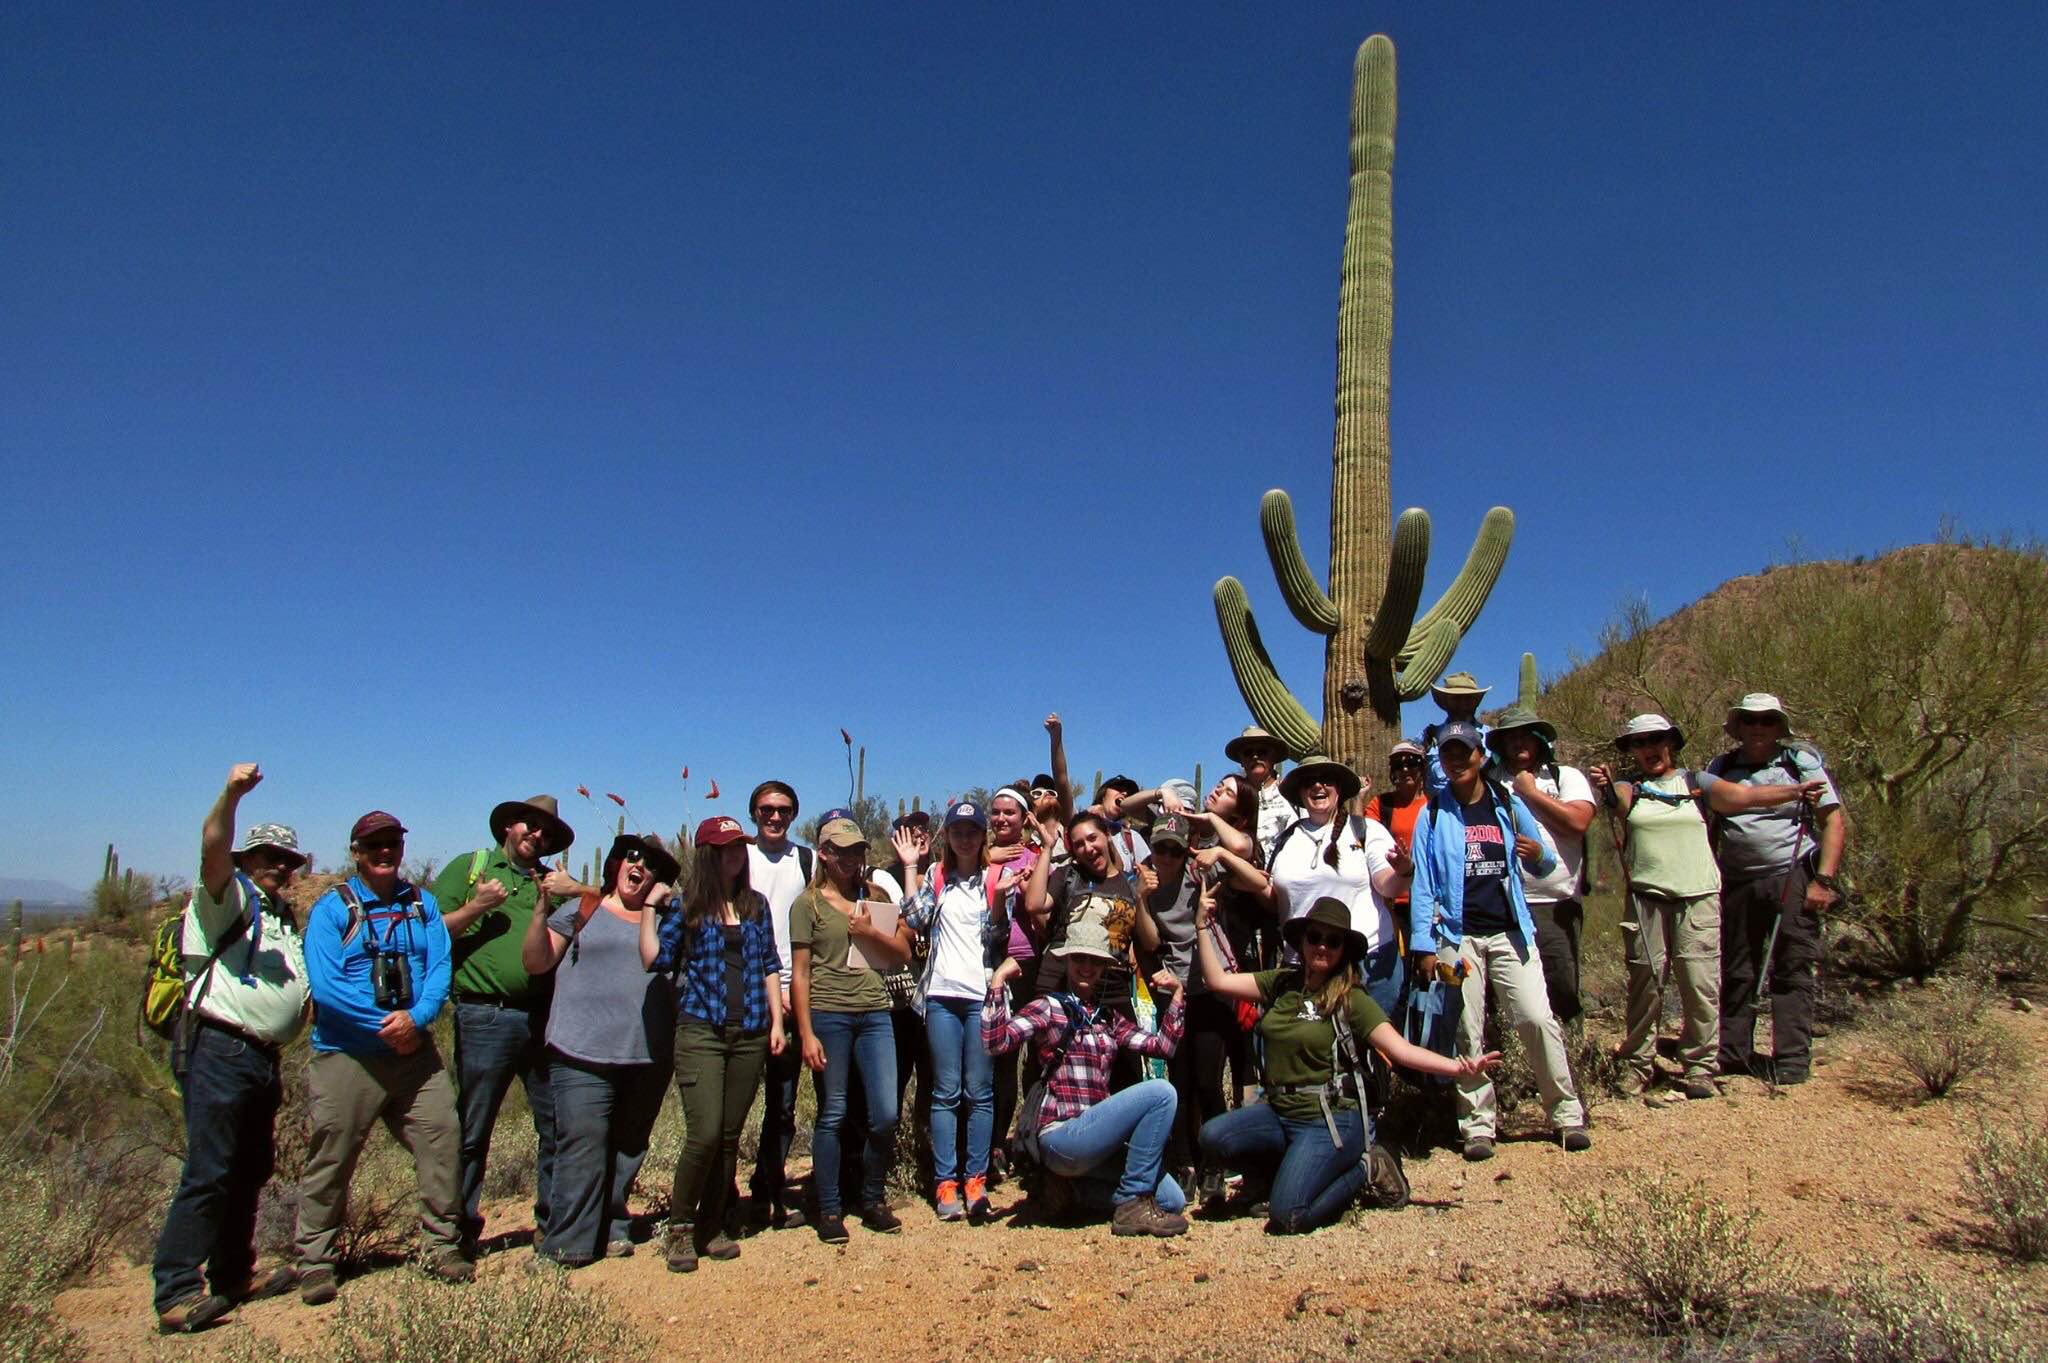 A group of bio students pose at Saguaro National Park